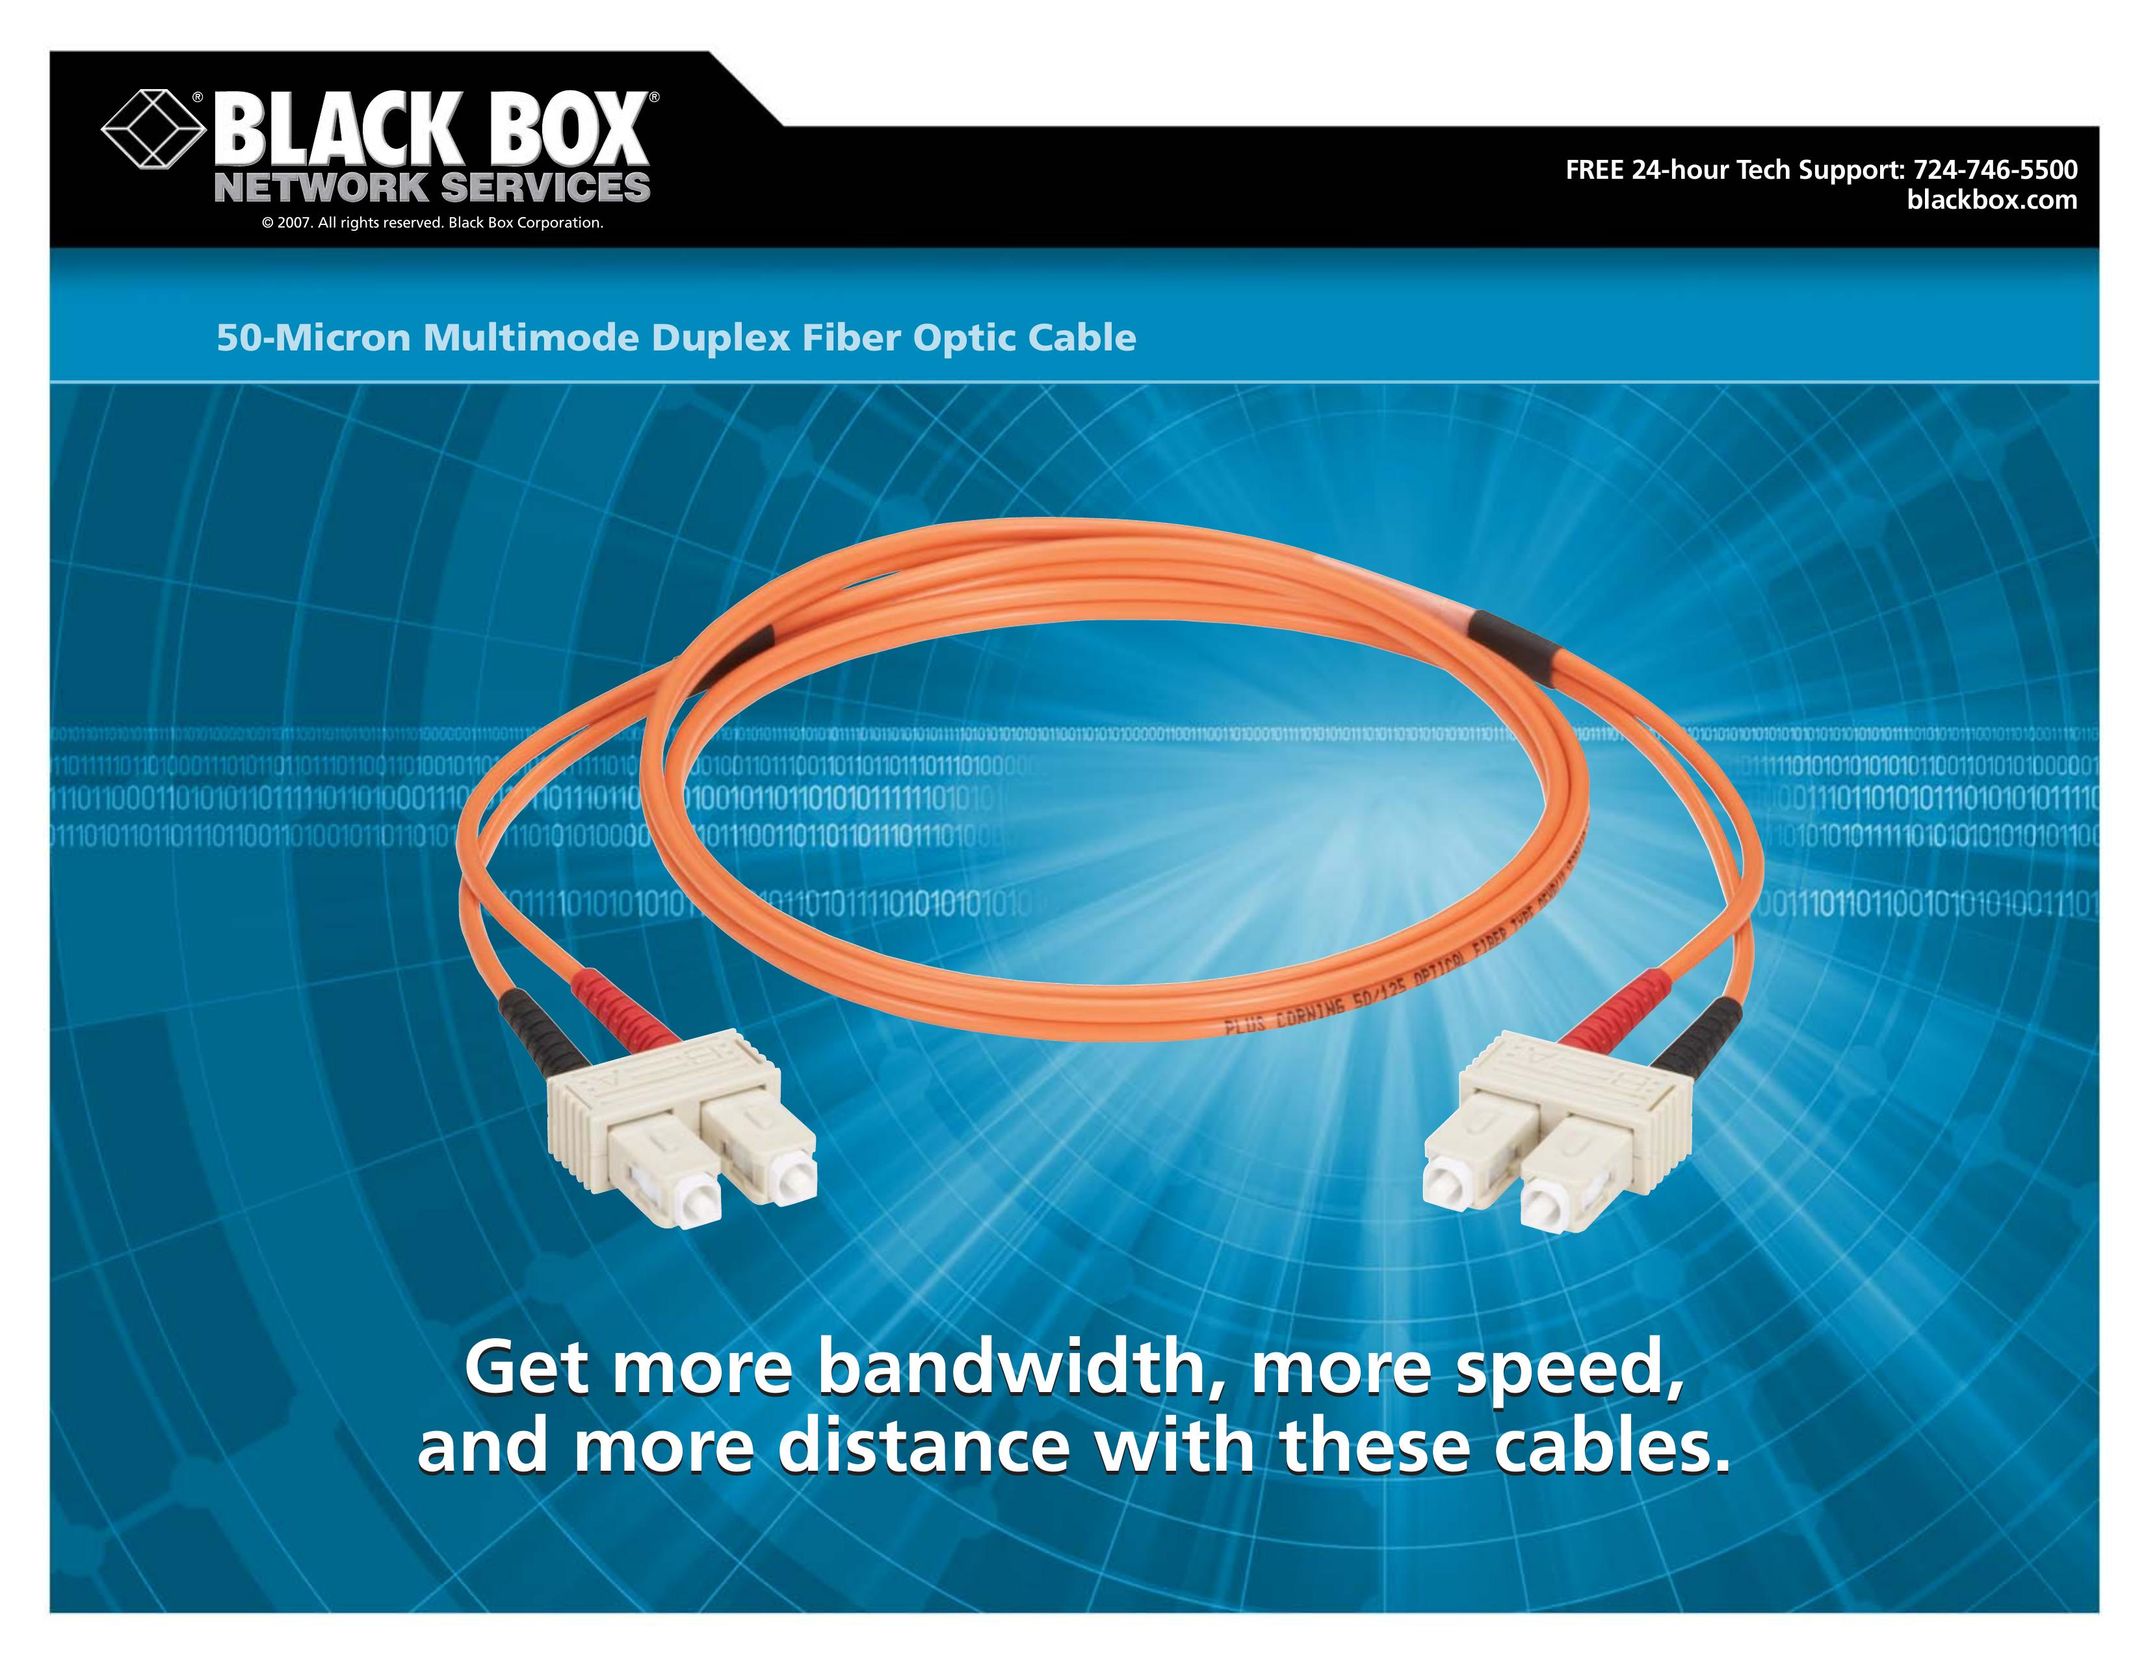 Black Box Duplex Fiber Optic Cable Stereo System User Manual